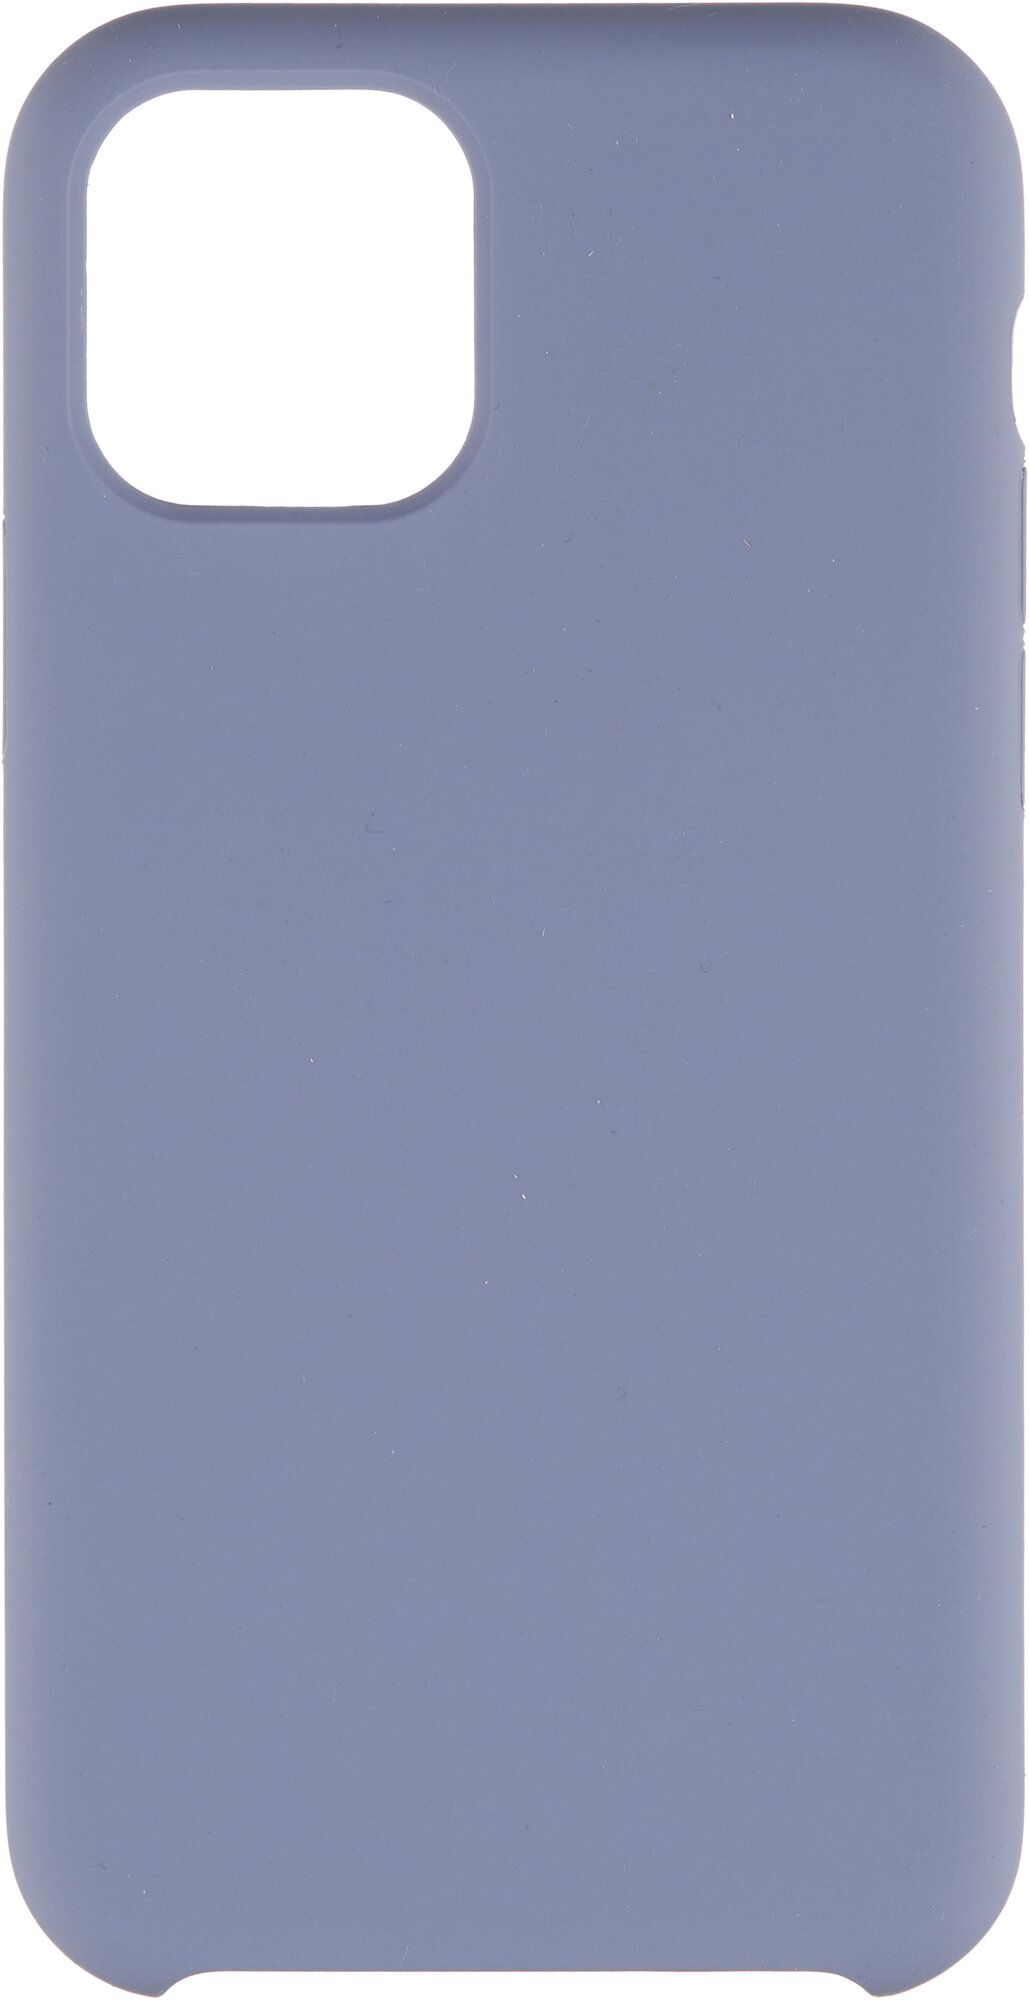 Чехол Liquid Silicone Case для Apple iPhone 11 Pro, серо-лавандовый, картон, Deppa